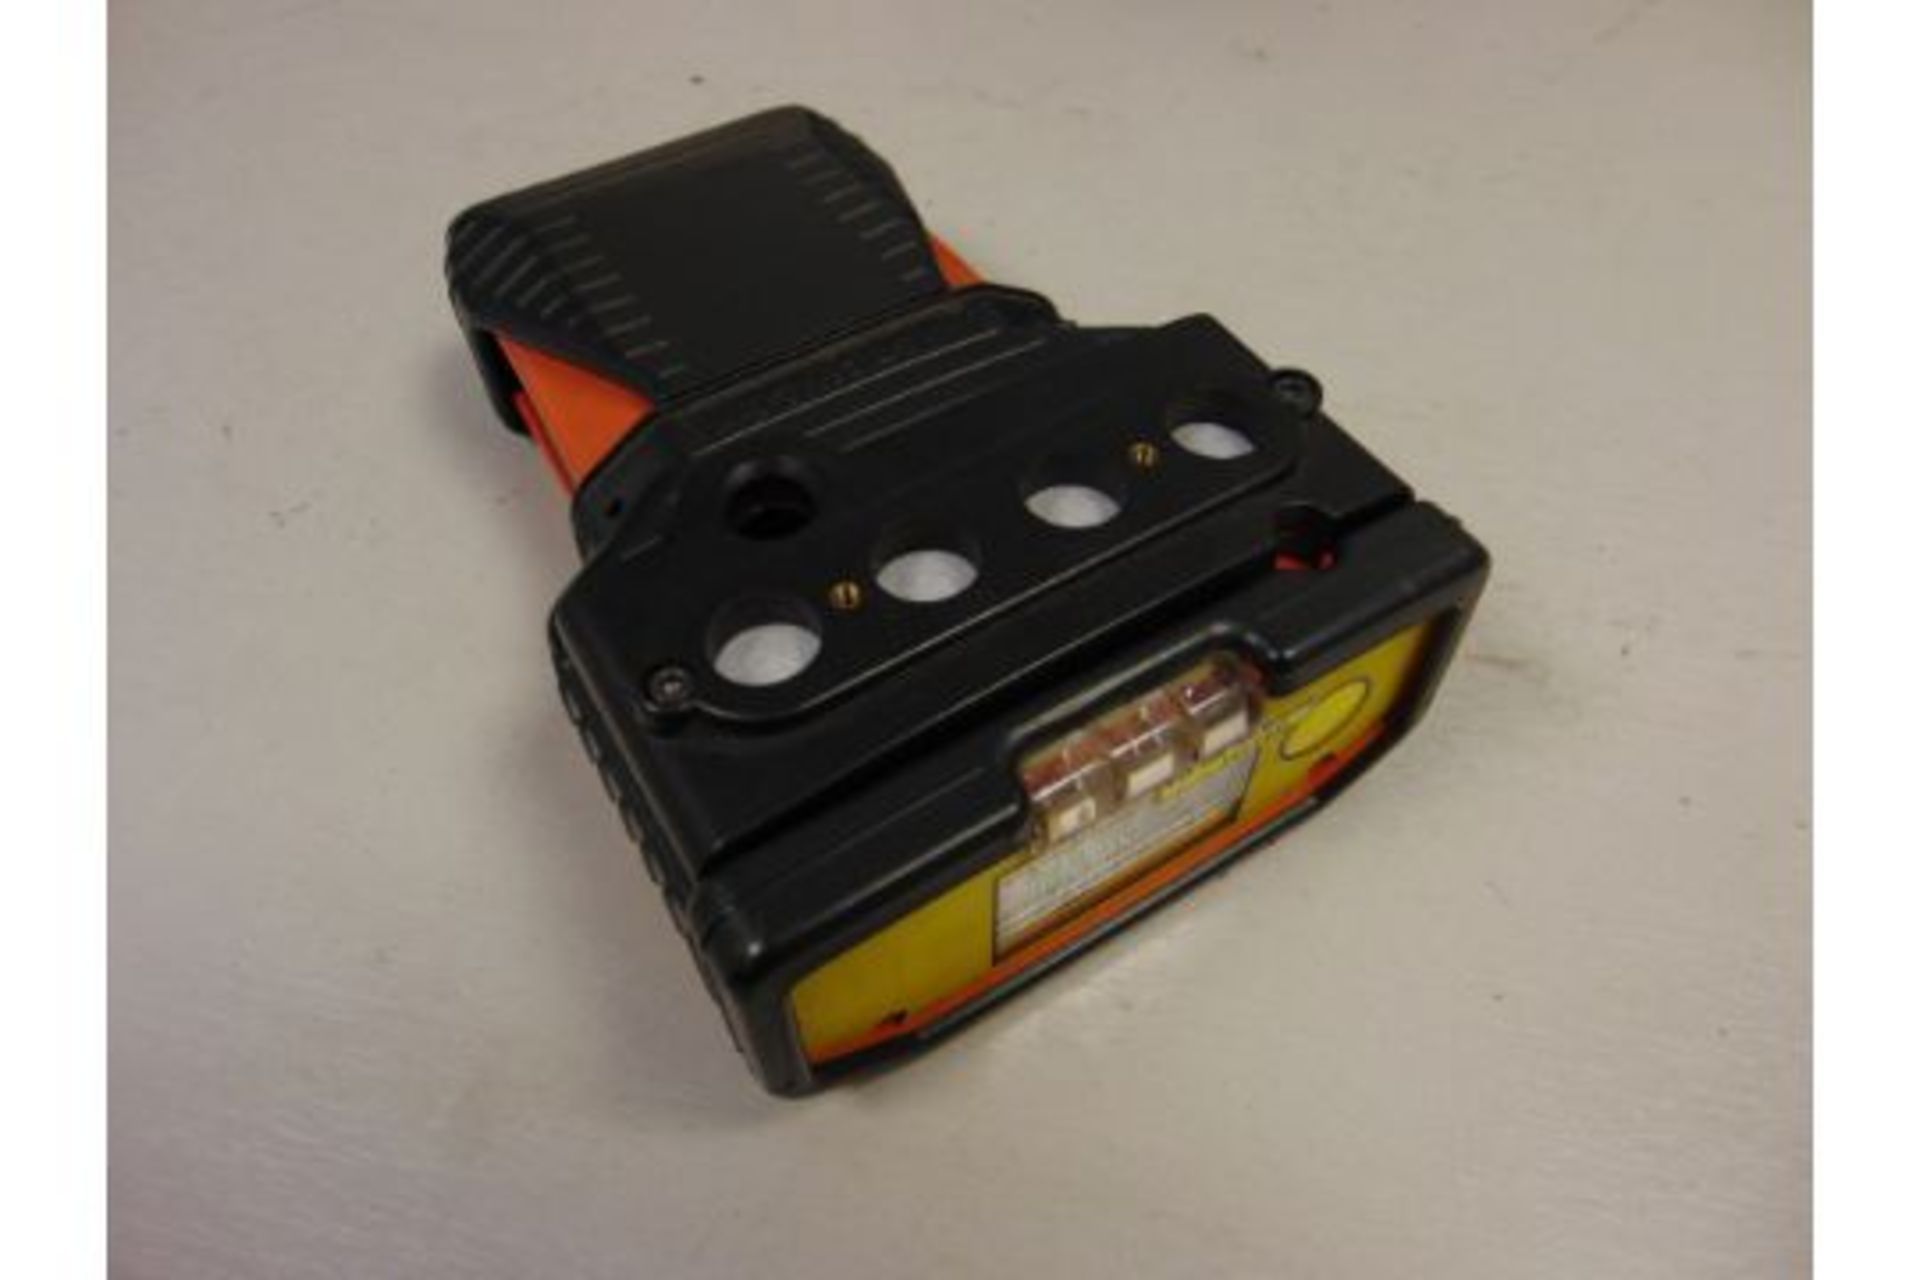 Crowcon Custodian CDL Portable Gas Monitor Kit - Image 3 of 4